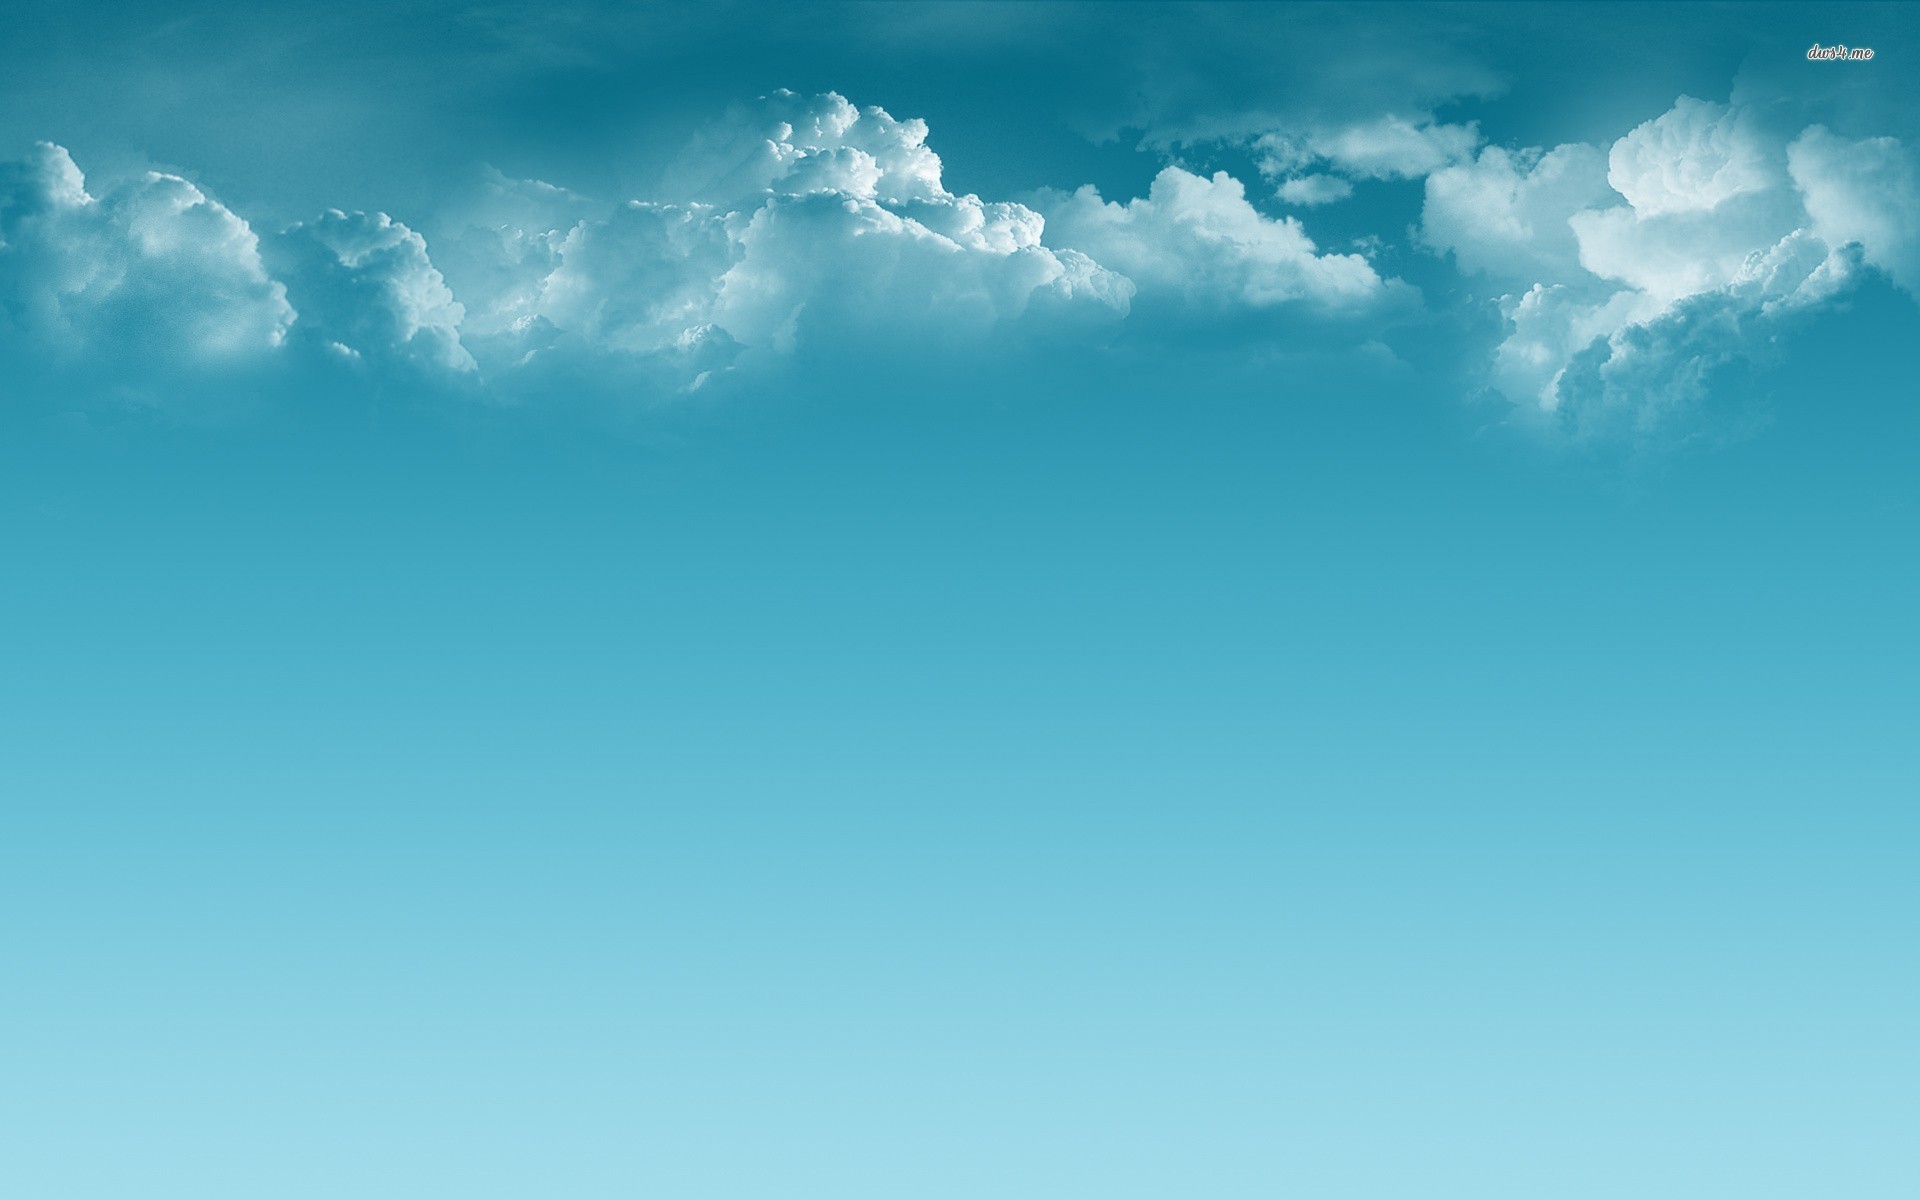 Clouds and blue sky 19201200 digital art wallpaper